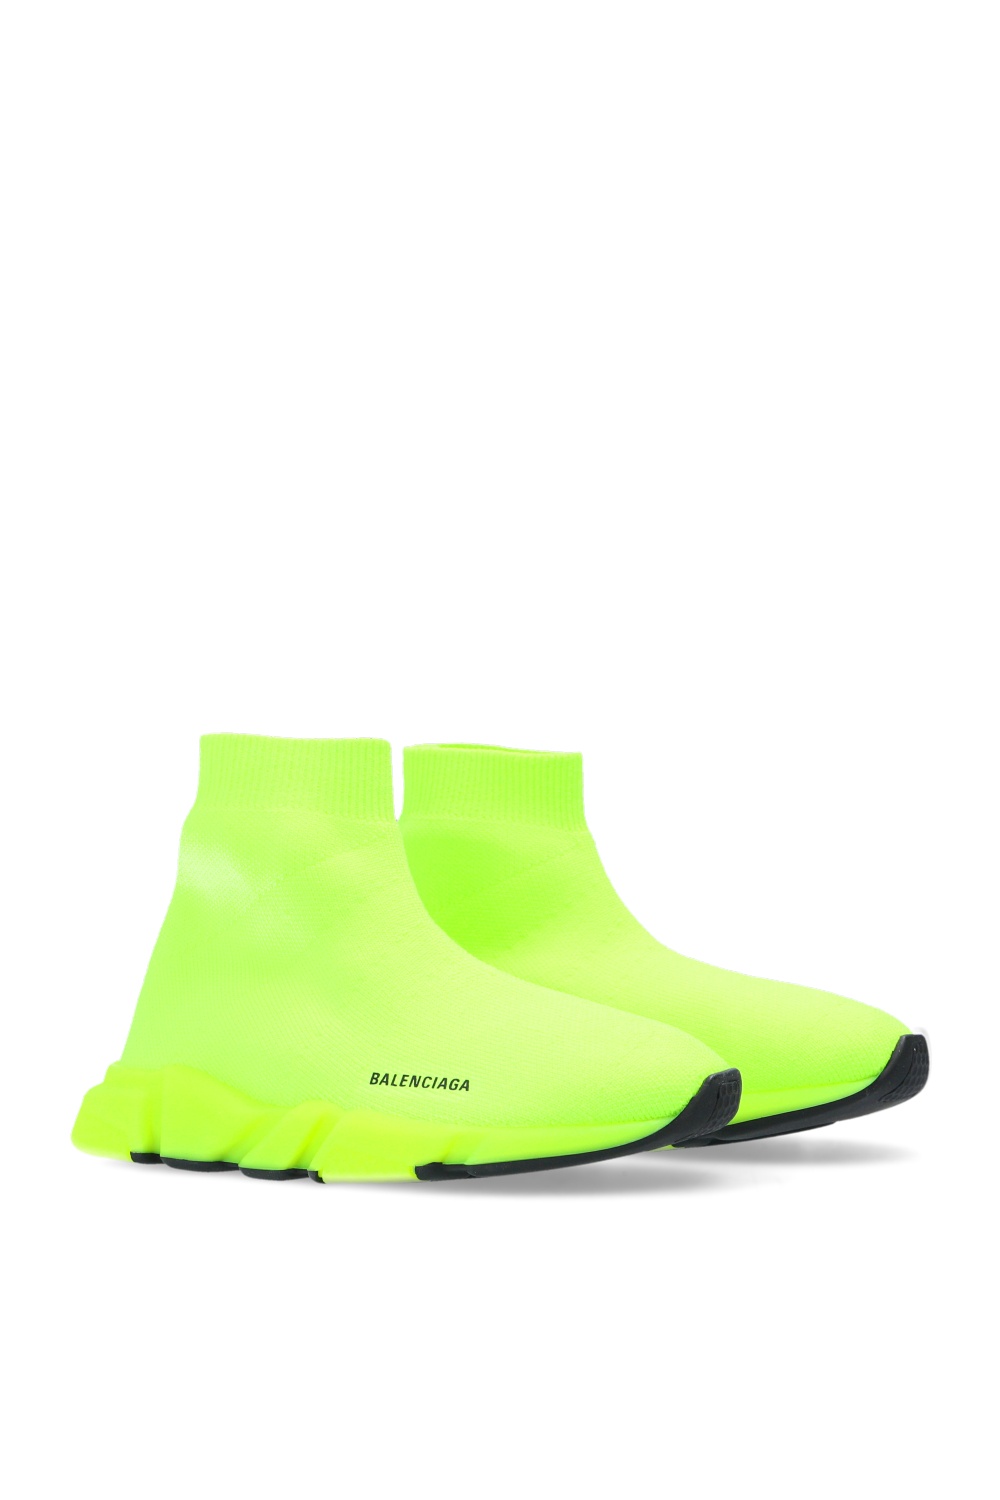 Balenciaga Kid039s Speed LU Sock Sneakers Black US 12125EU 2930 475   eBay